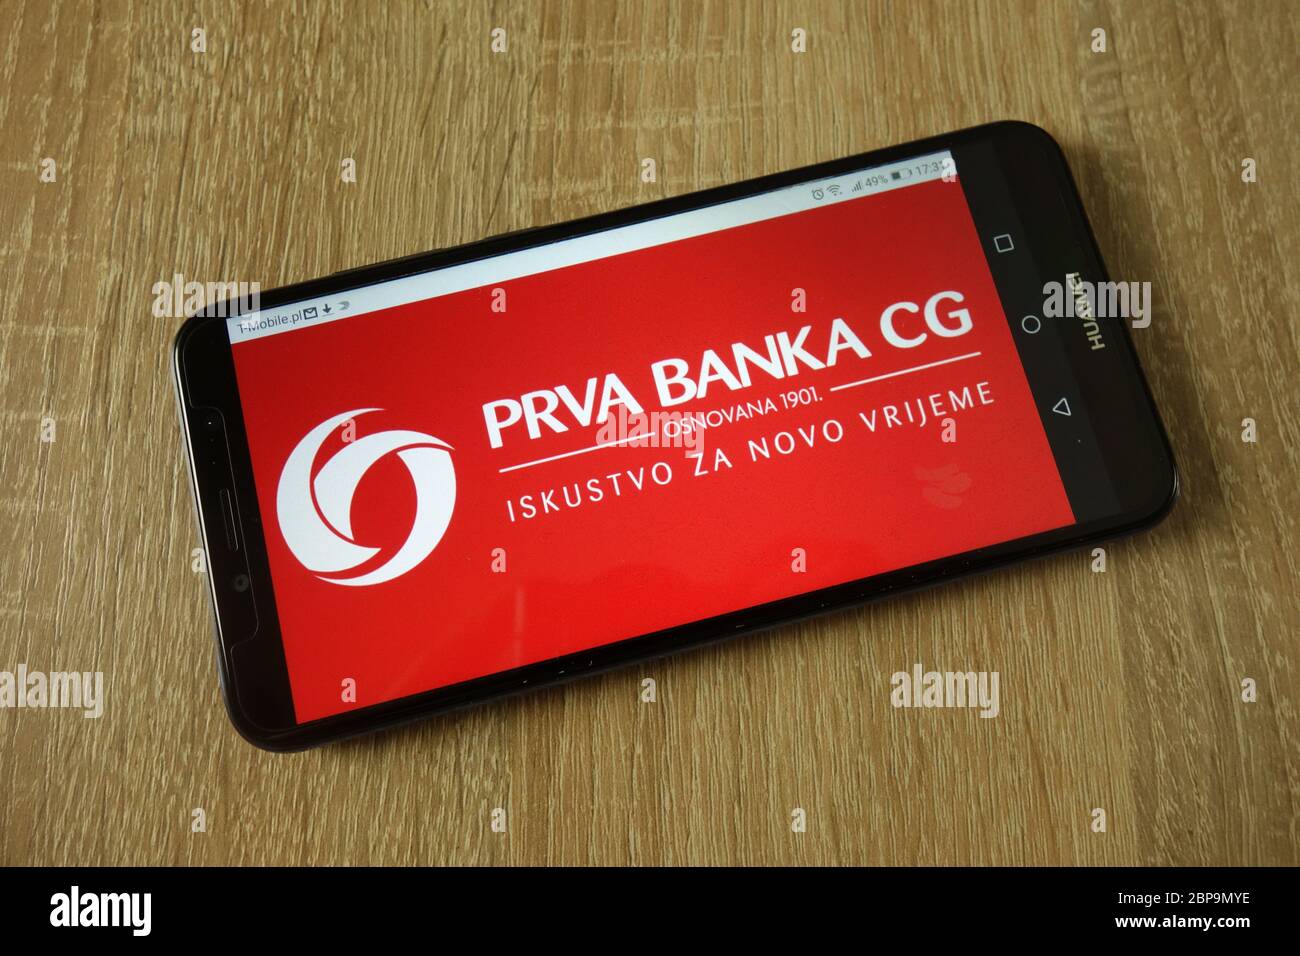 Prva banka Crne Gore AD logo displayed on smartphone Stock Photo